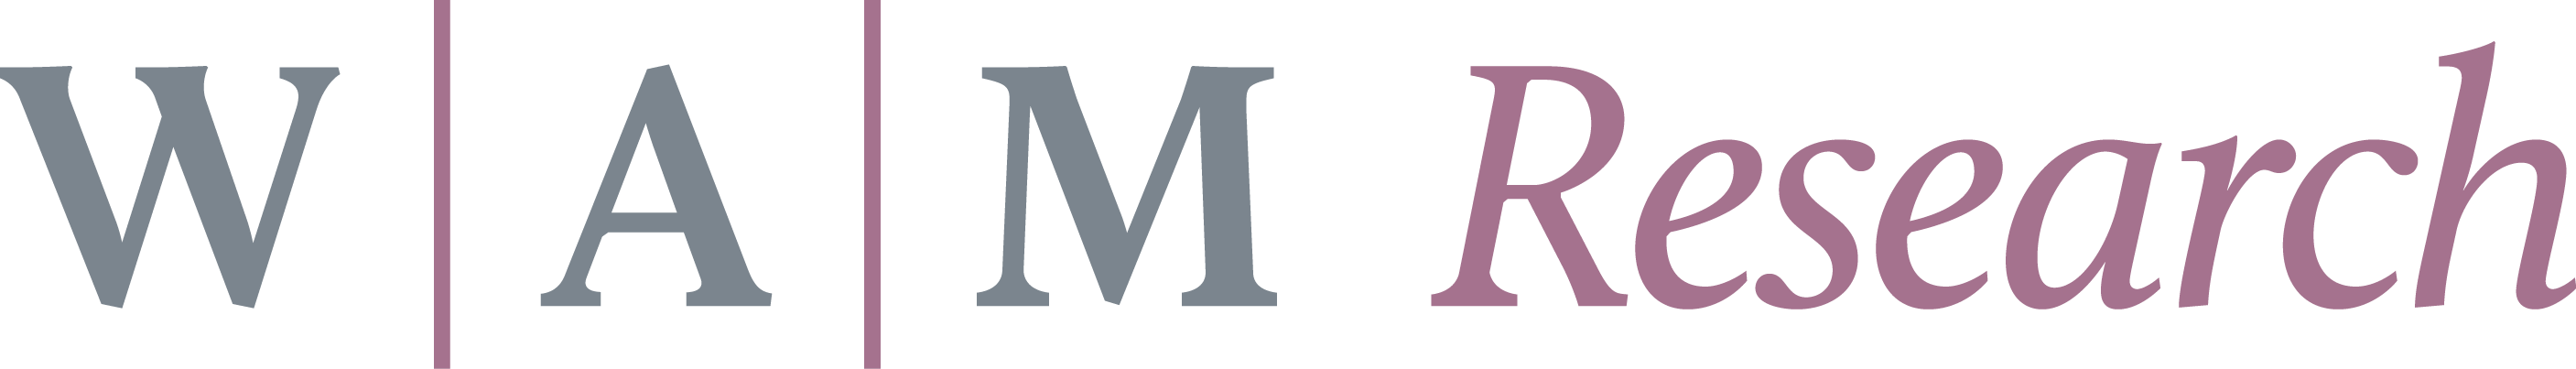 WAM Research Fund Logo